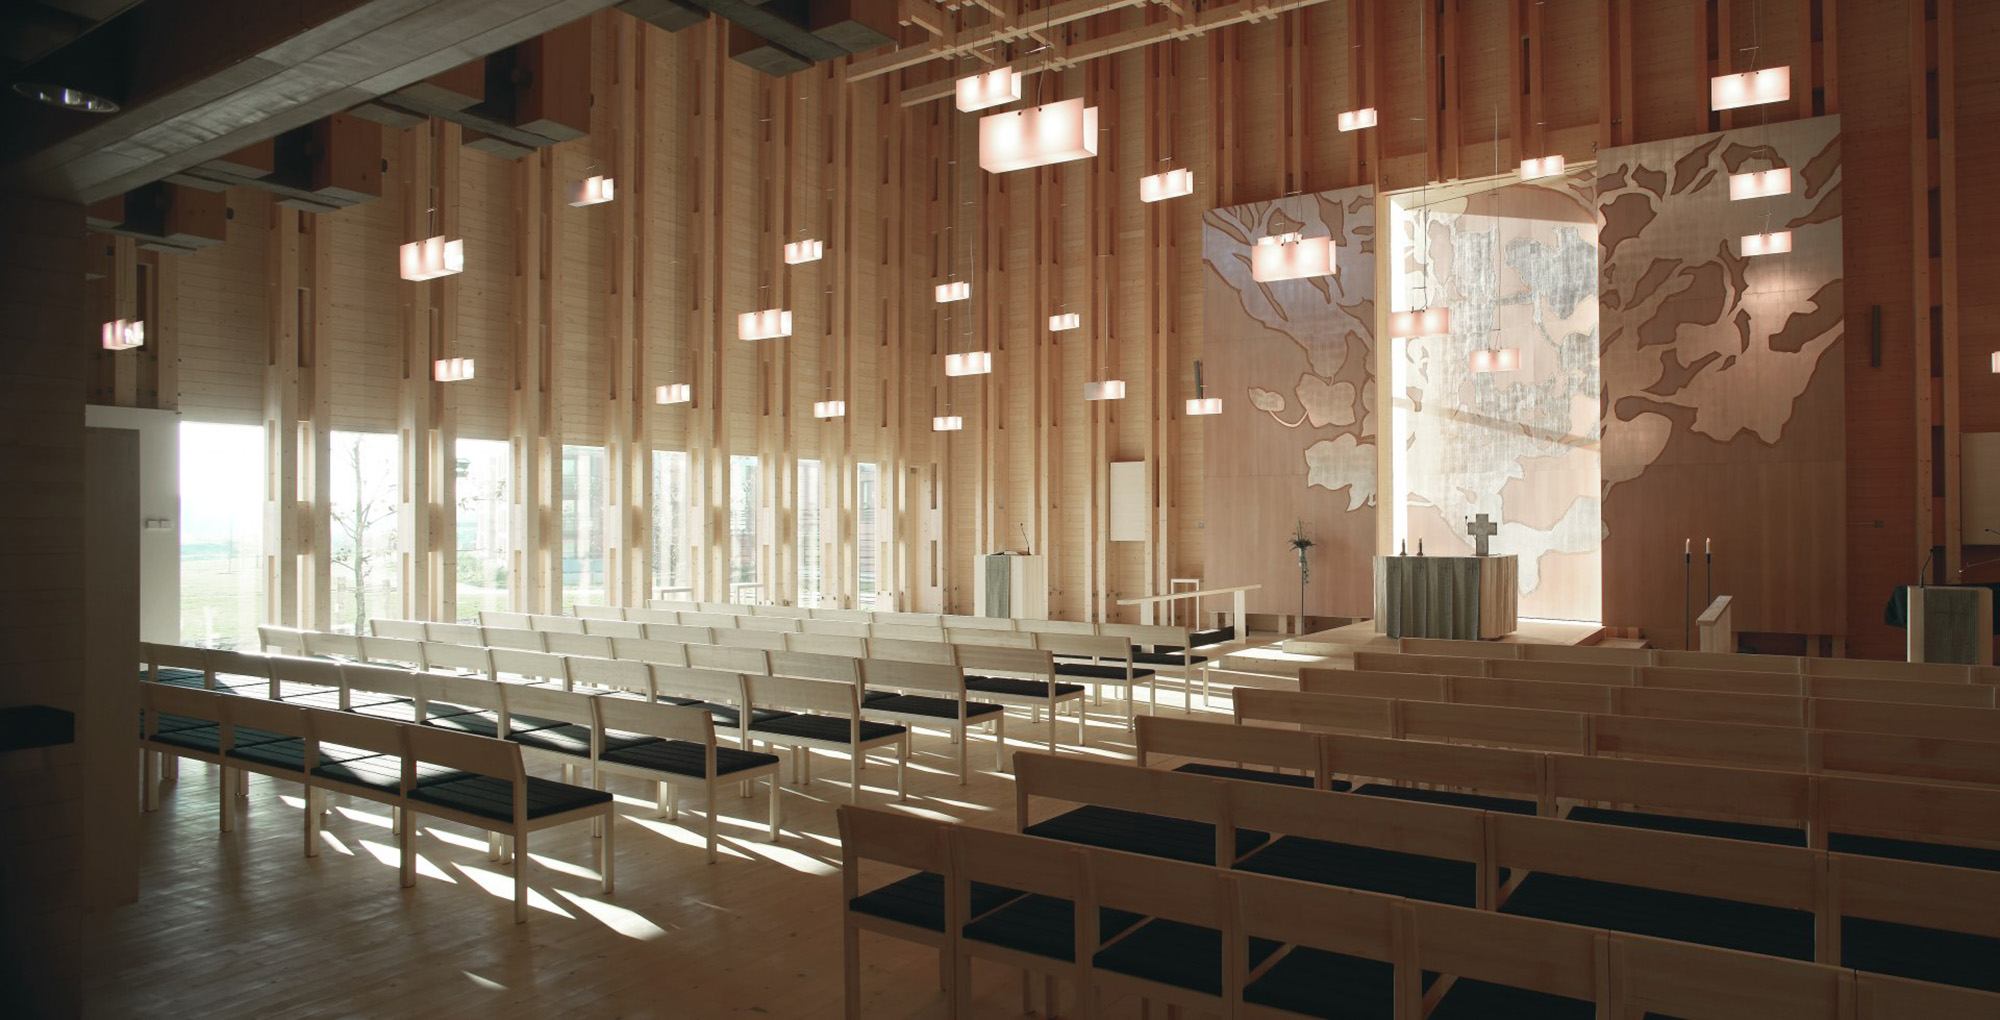 Viikki Church design by JKMM Architects